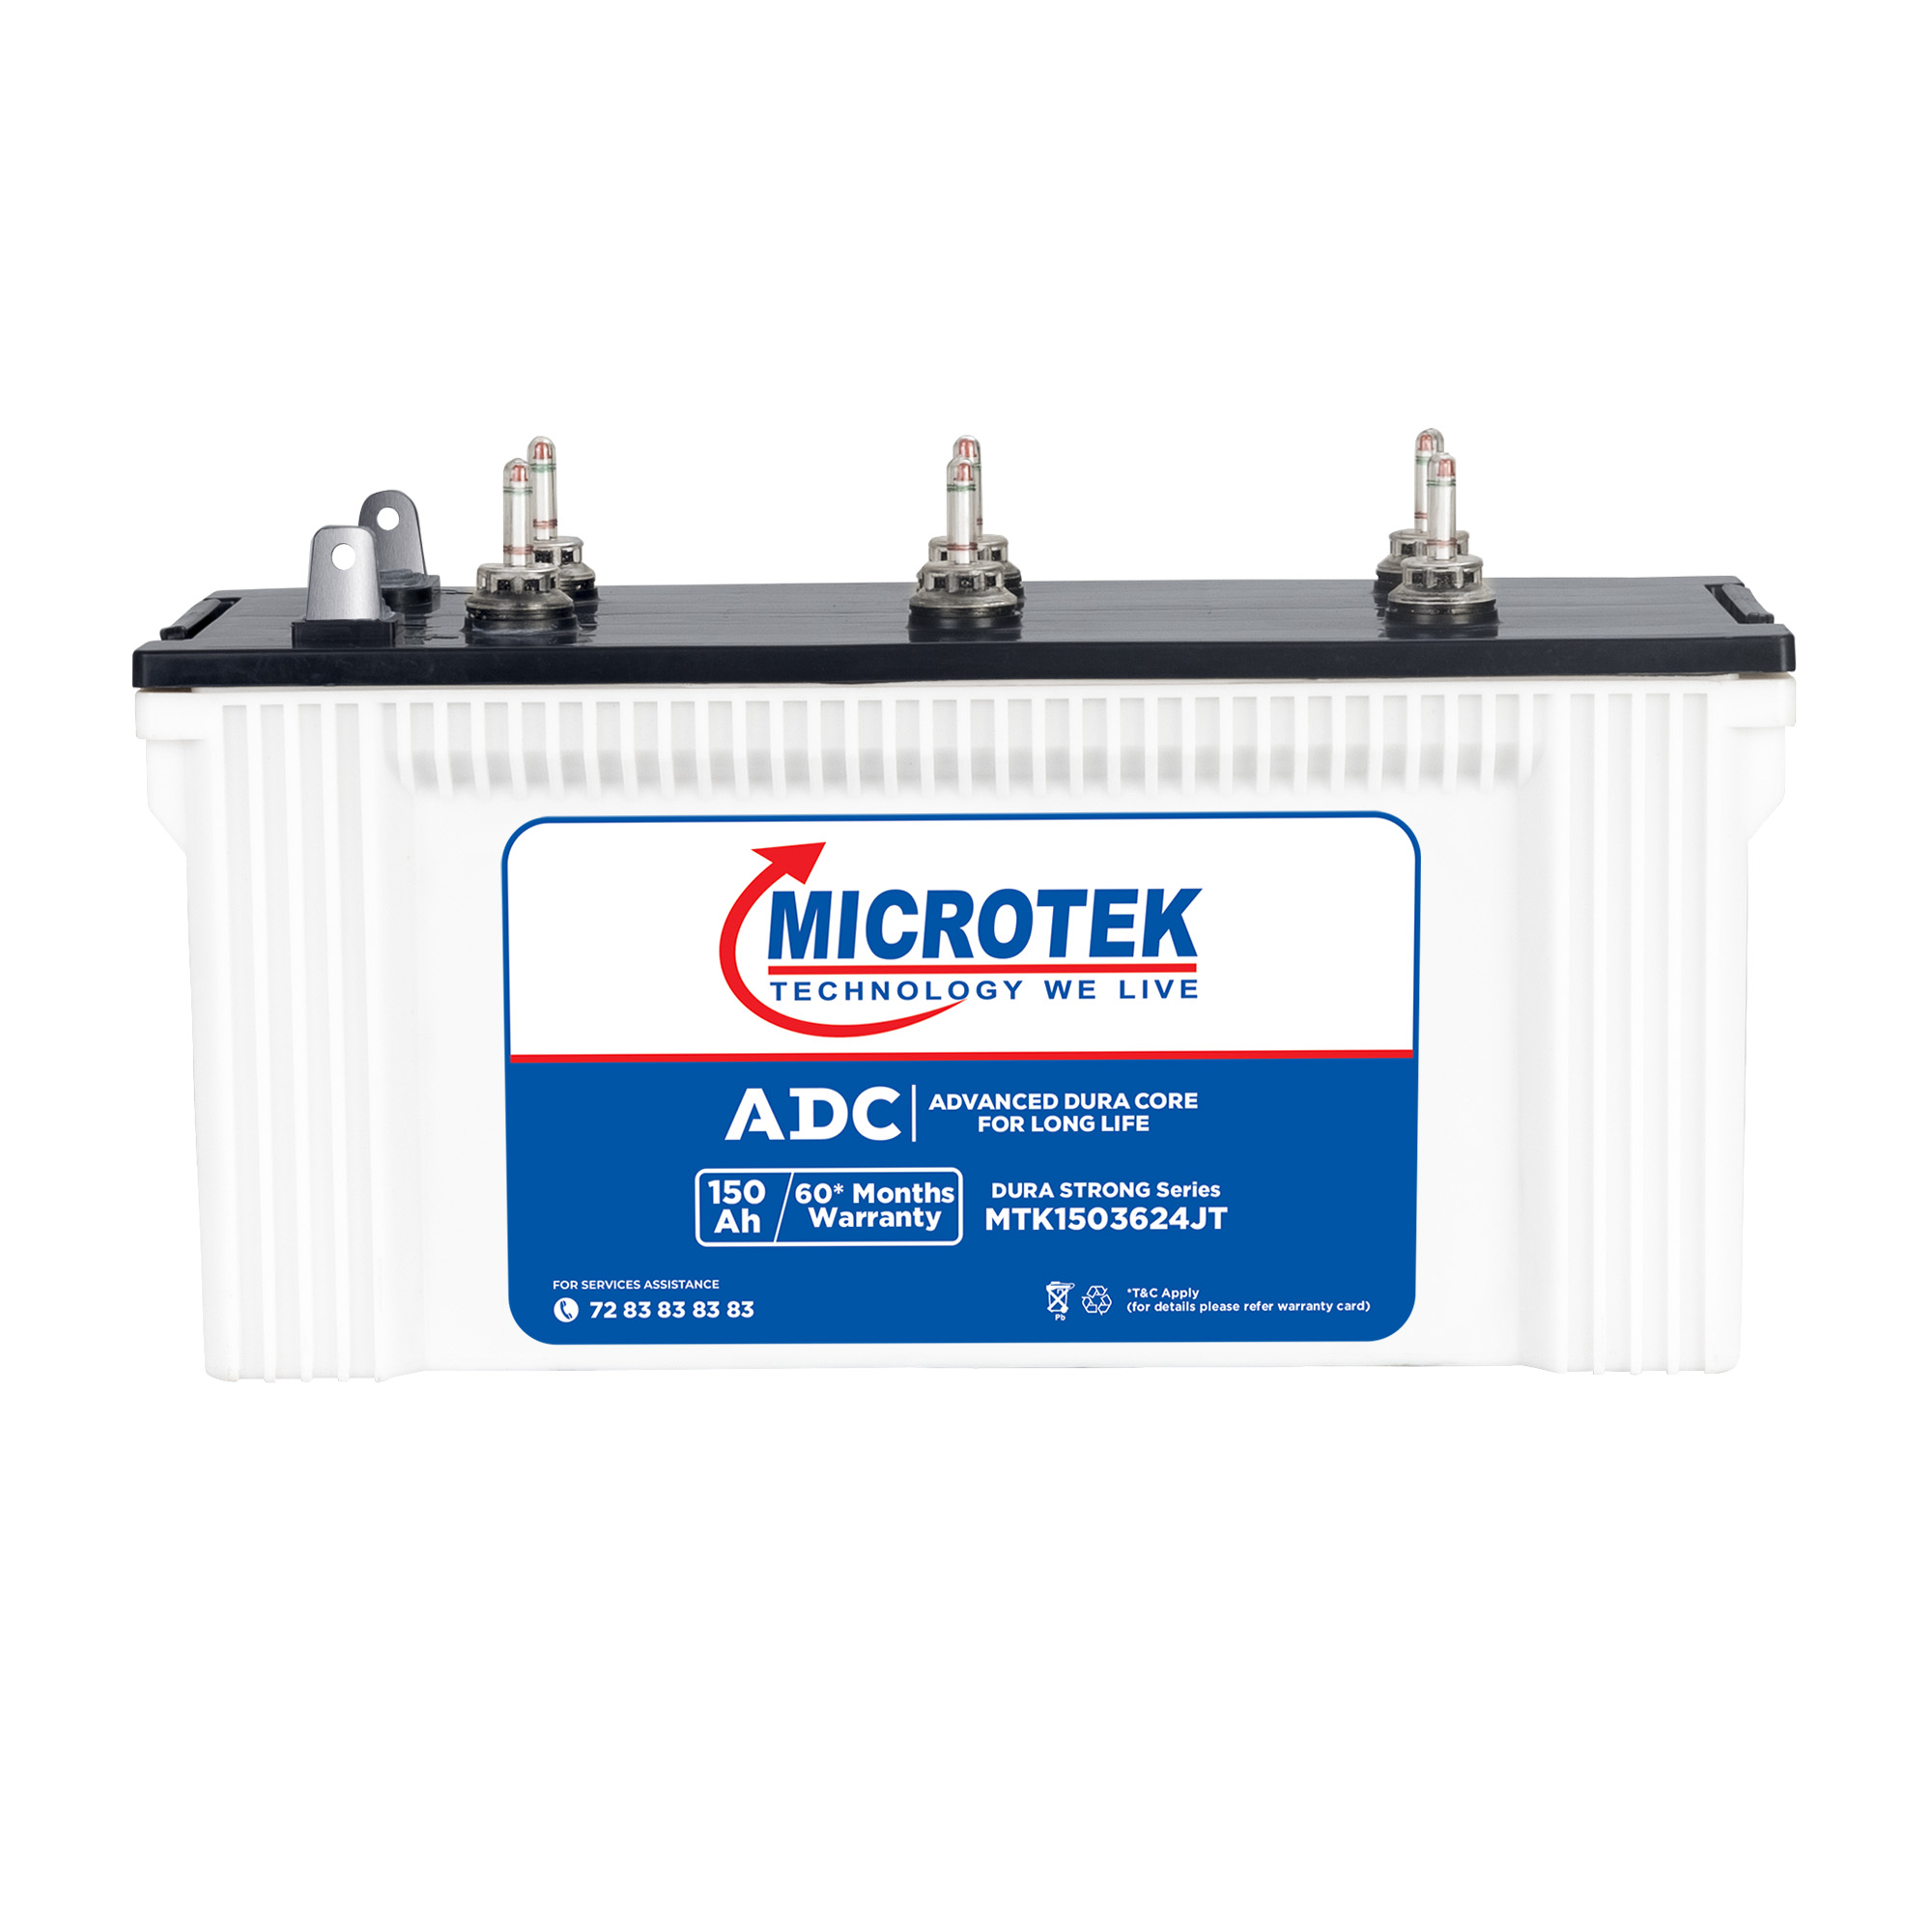 Microtek Dura Prime MTK1503624JT 150Ah/12V Inverter Battery With Advanced Dura Core Technology